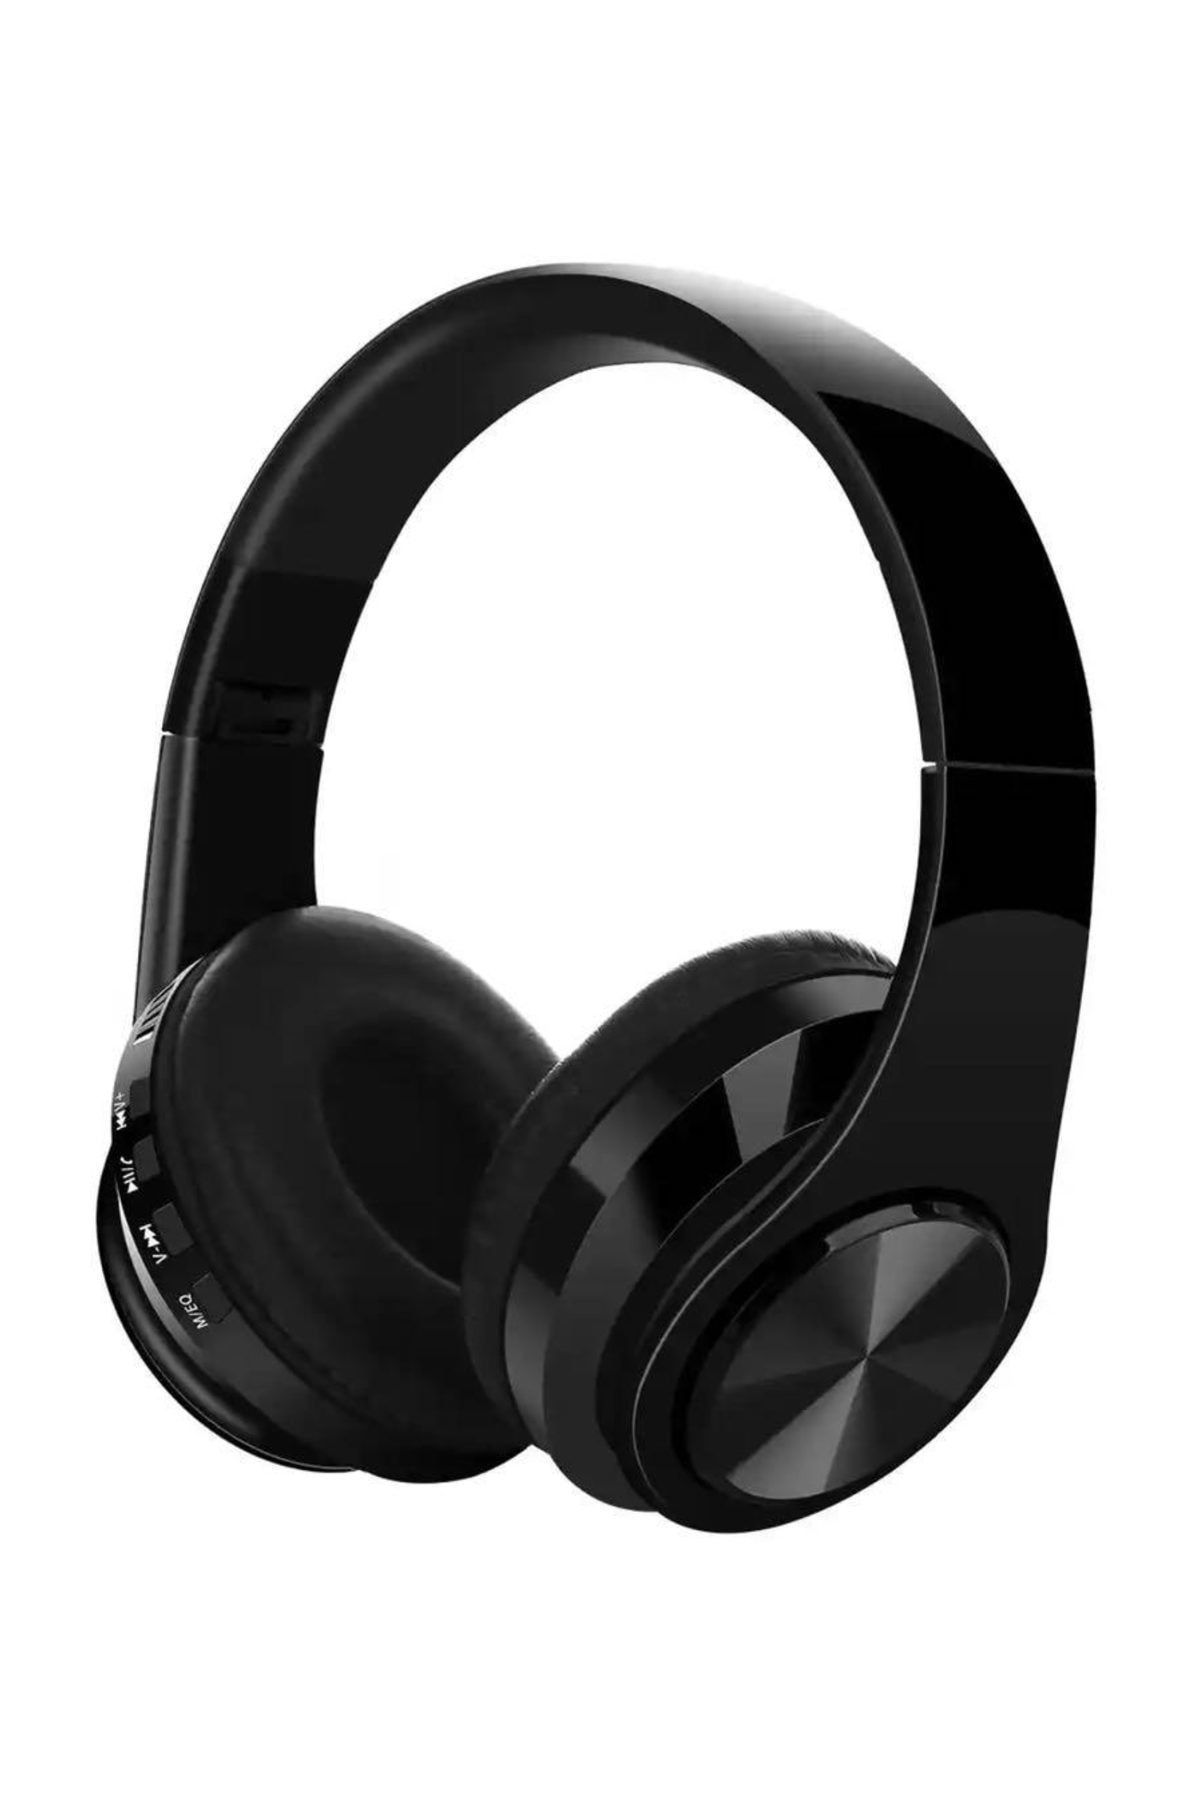 Yui Yuı Fg-69 Turuncu Bluetooth Kulaküstü Kulaklık (YUİ TÜRKİYE GARANTİLİ)